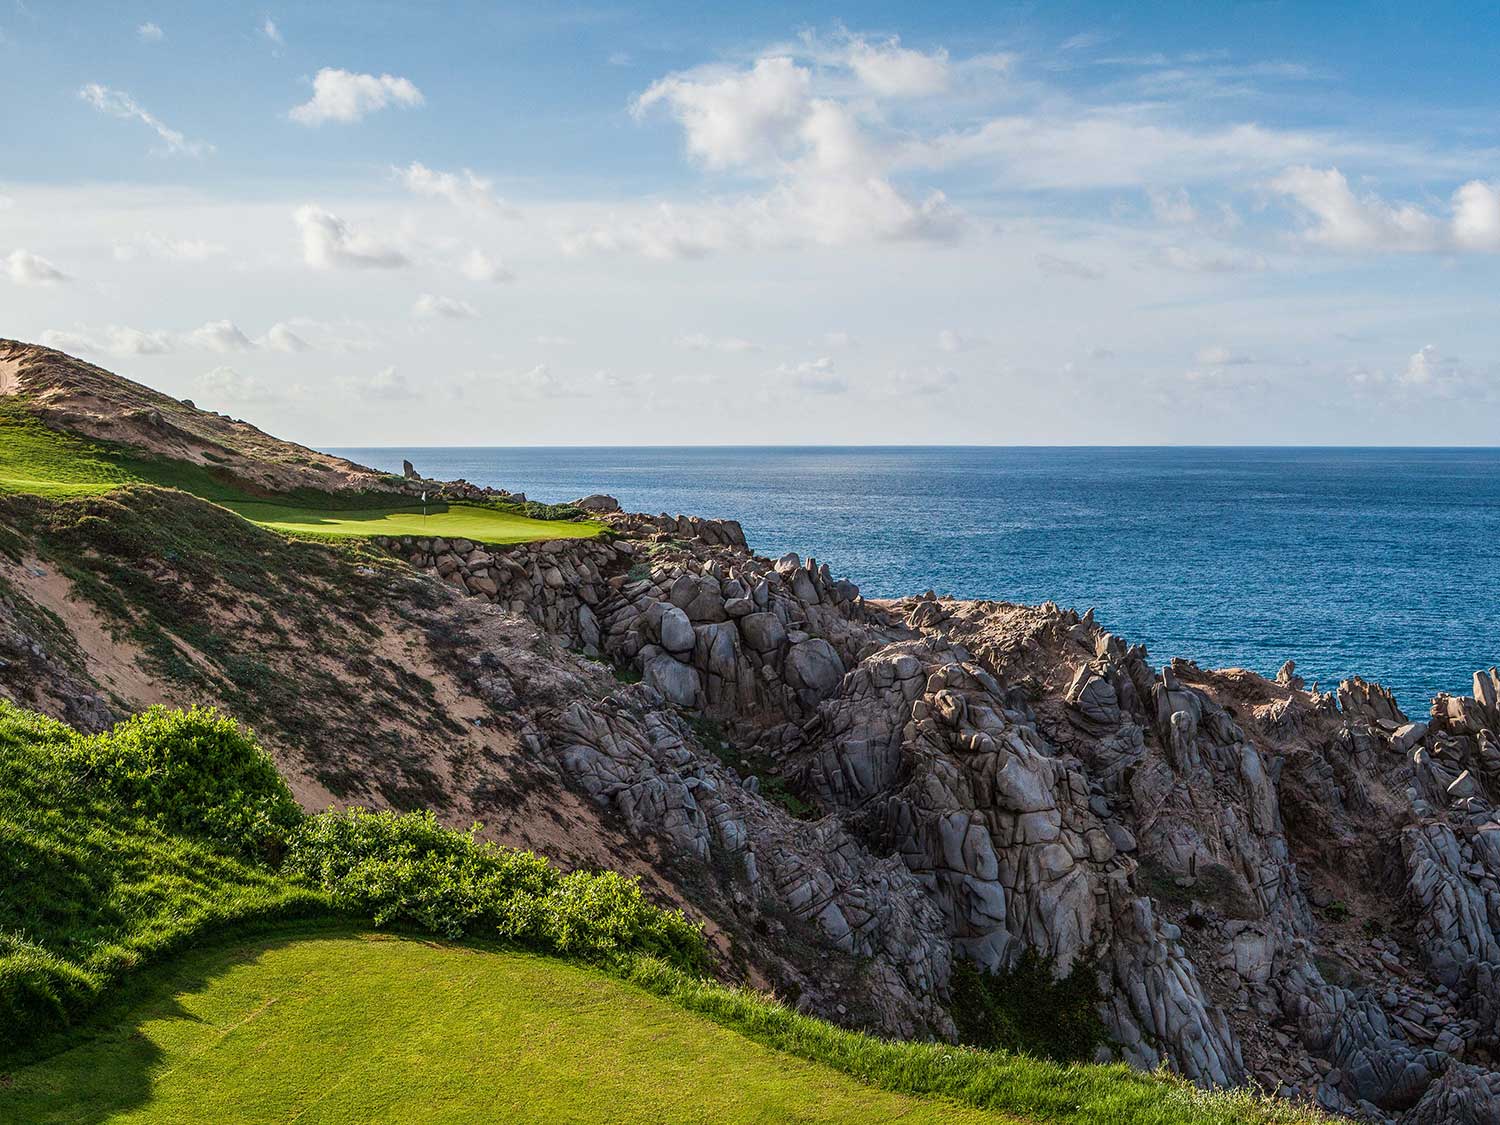 A rocky cliffside next to the Quivira Golf Club.